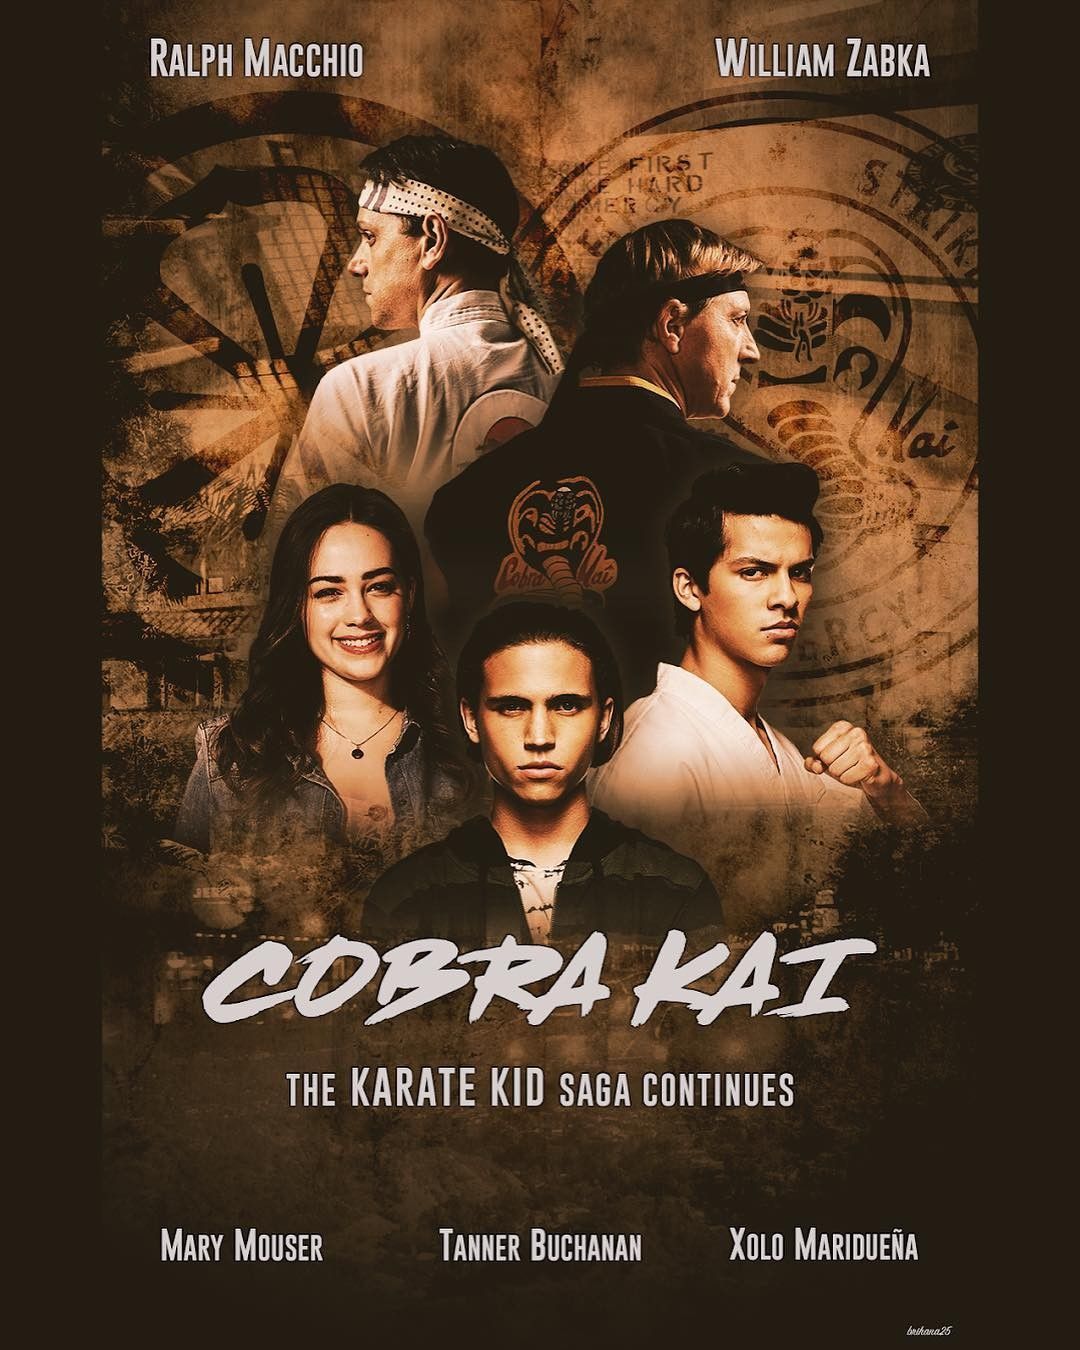 Cobra Kai Cast Movie Actors Director And Crew Roles Salary Super